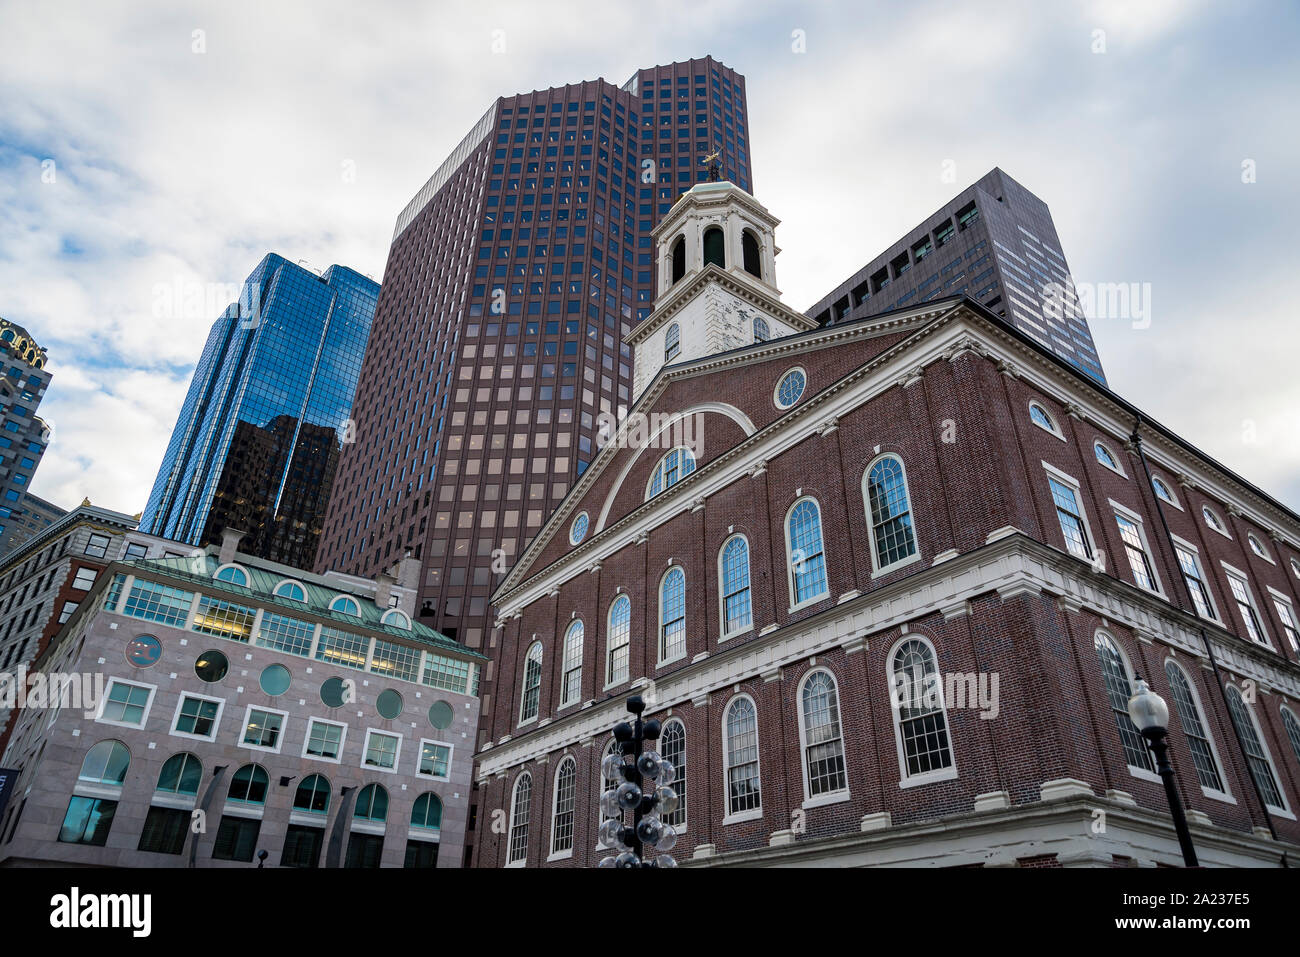 Historical buildings in the city of Boston, Massachusetts USA Stock Photo